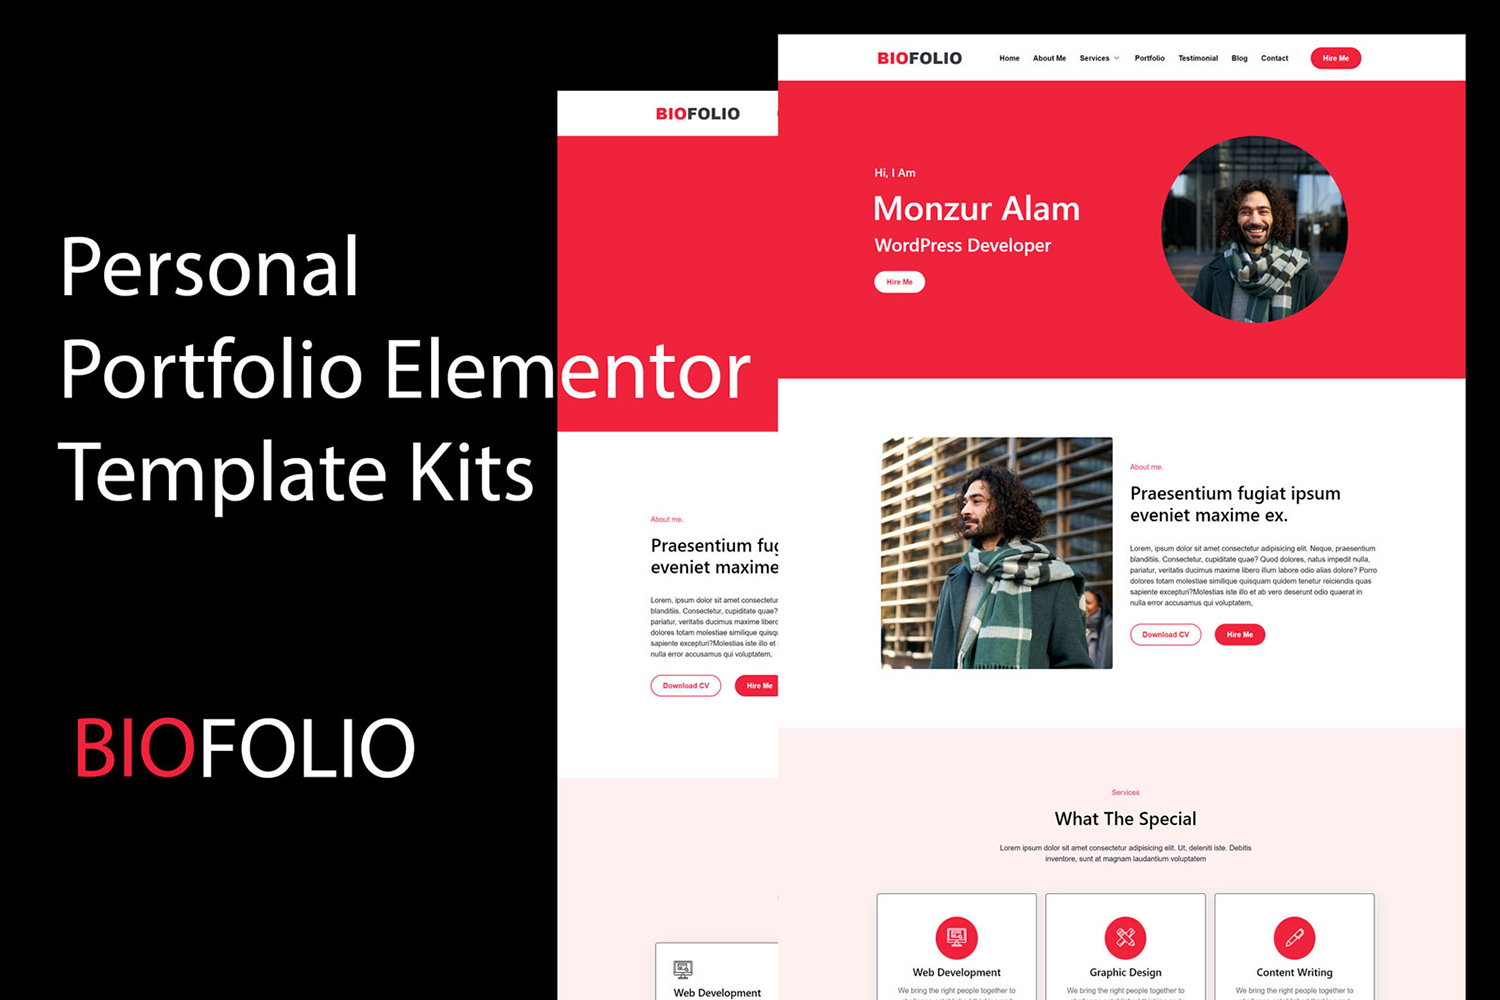 Elementor Kits